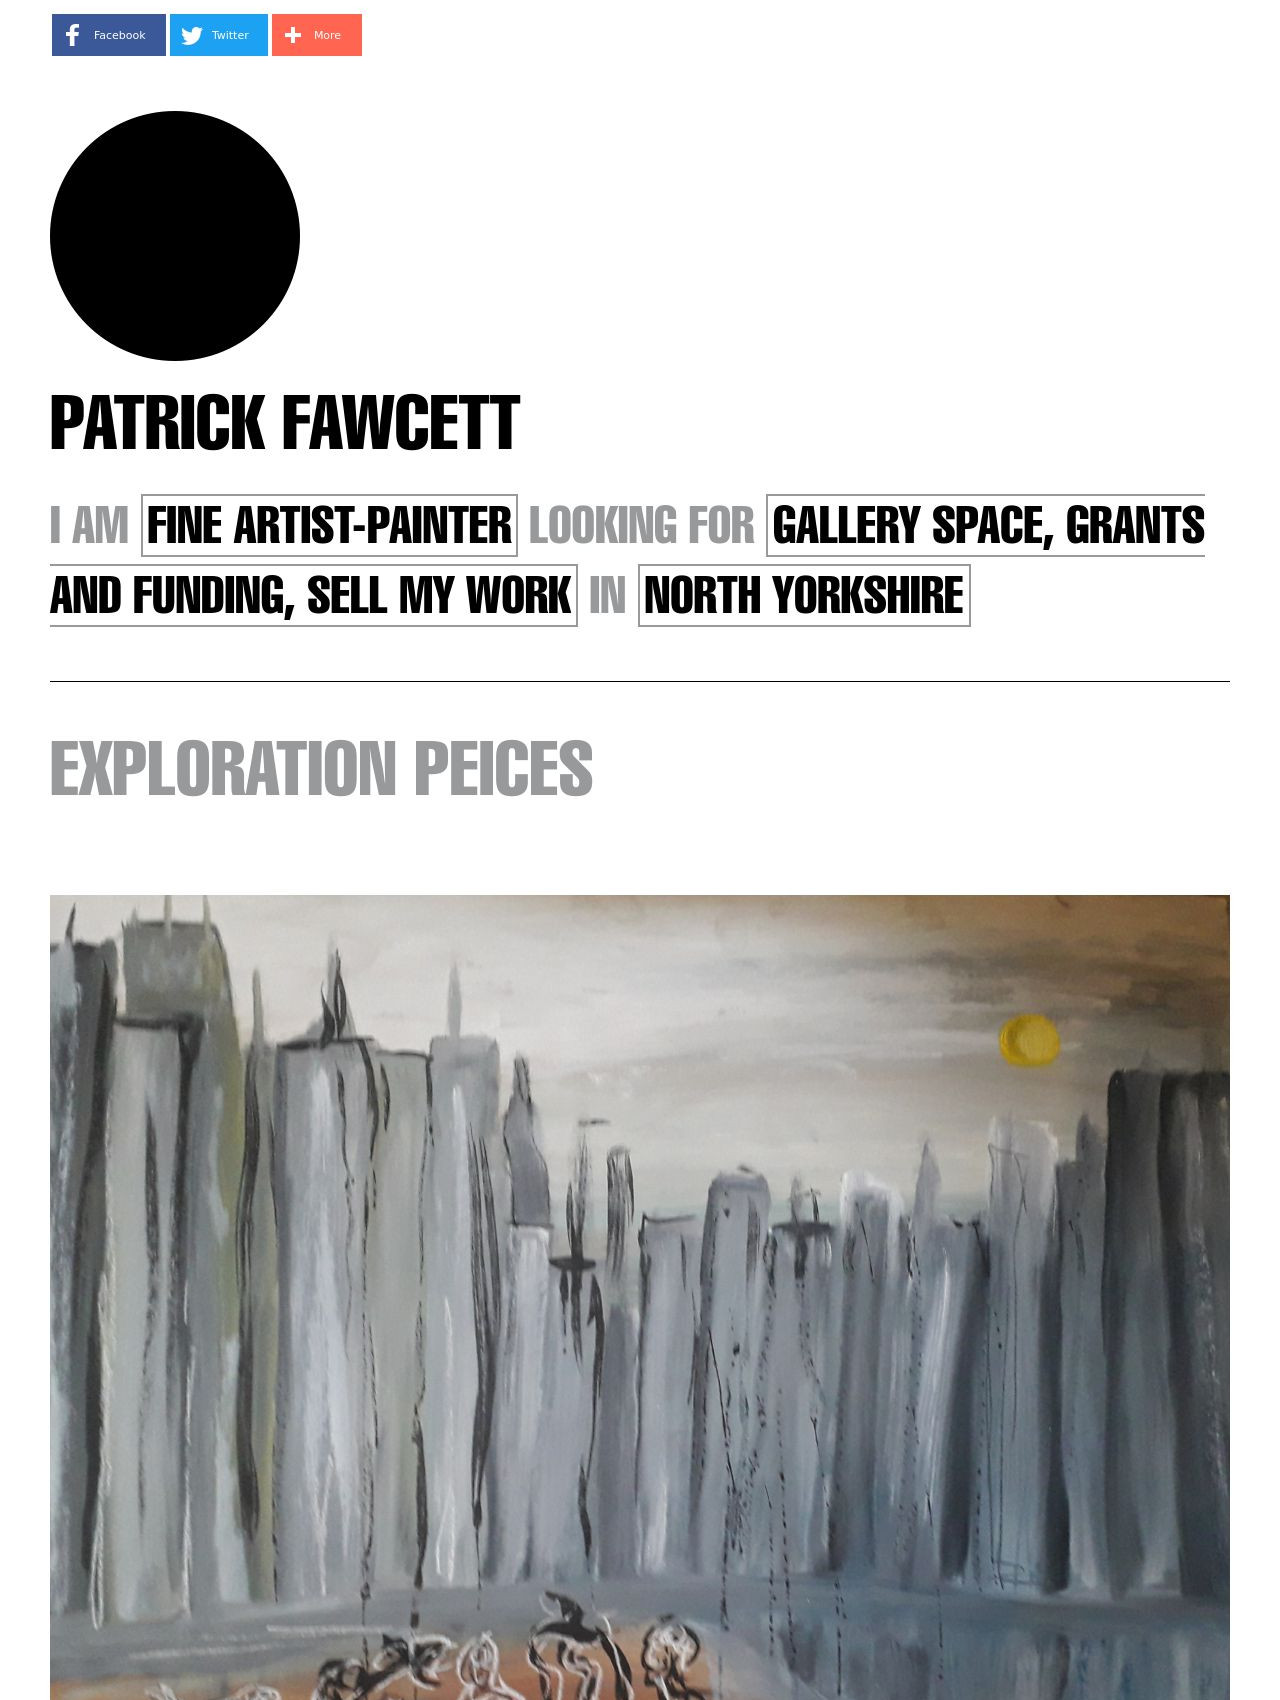 Patrick Fawcett